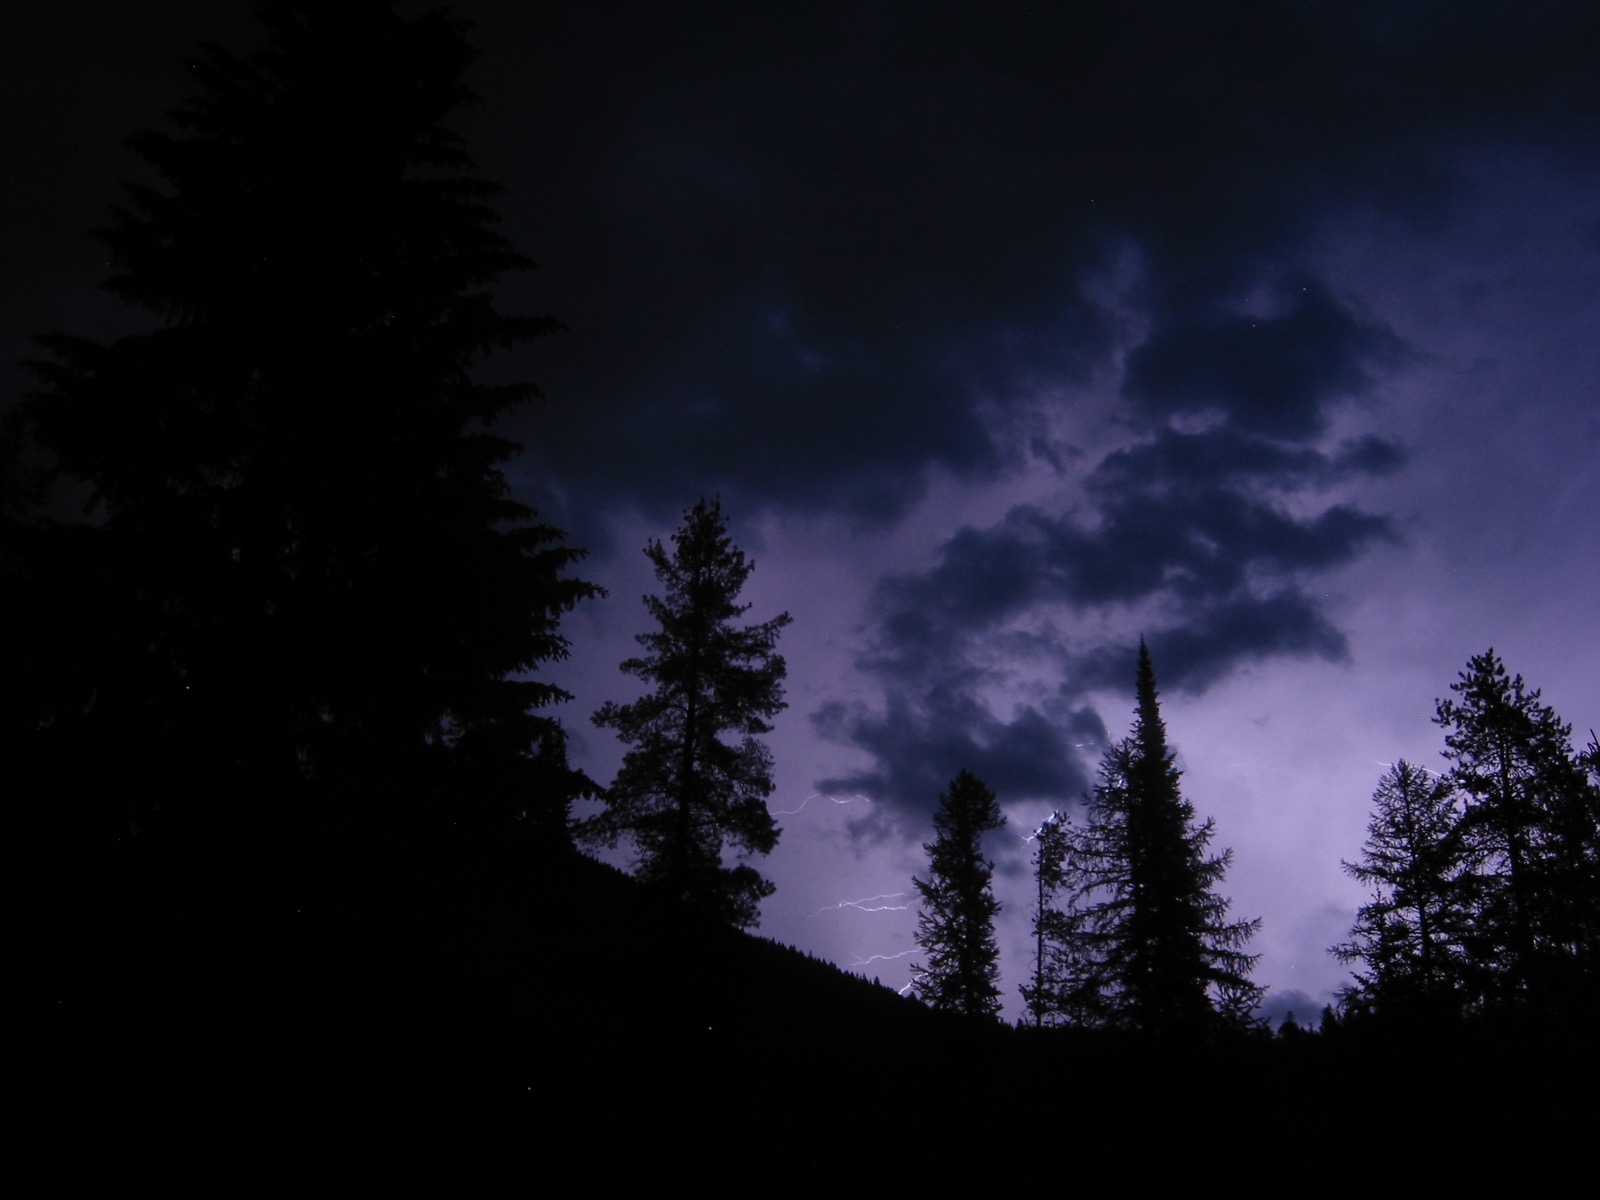 Dark stormy night